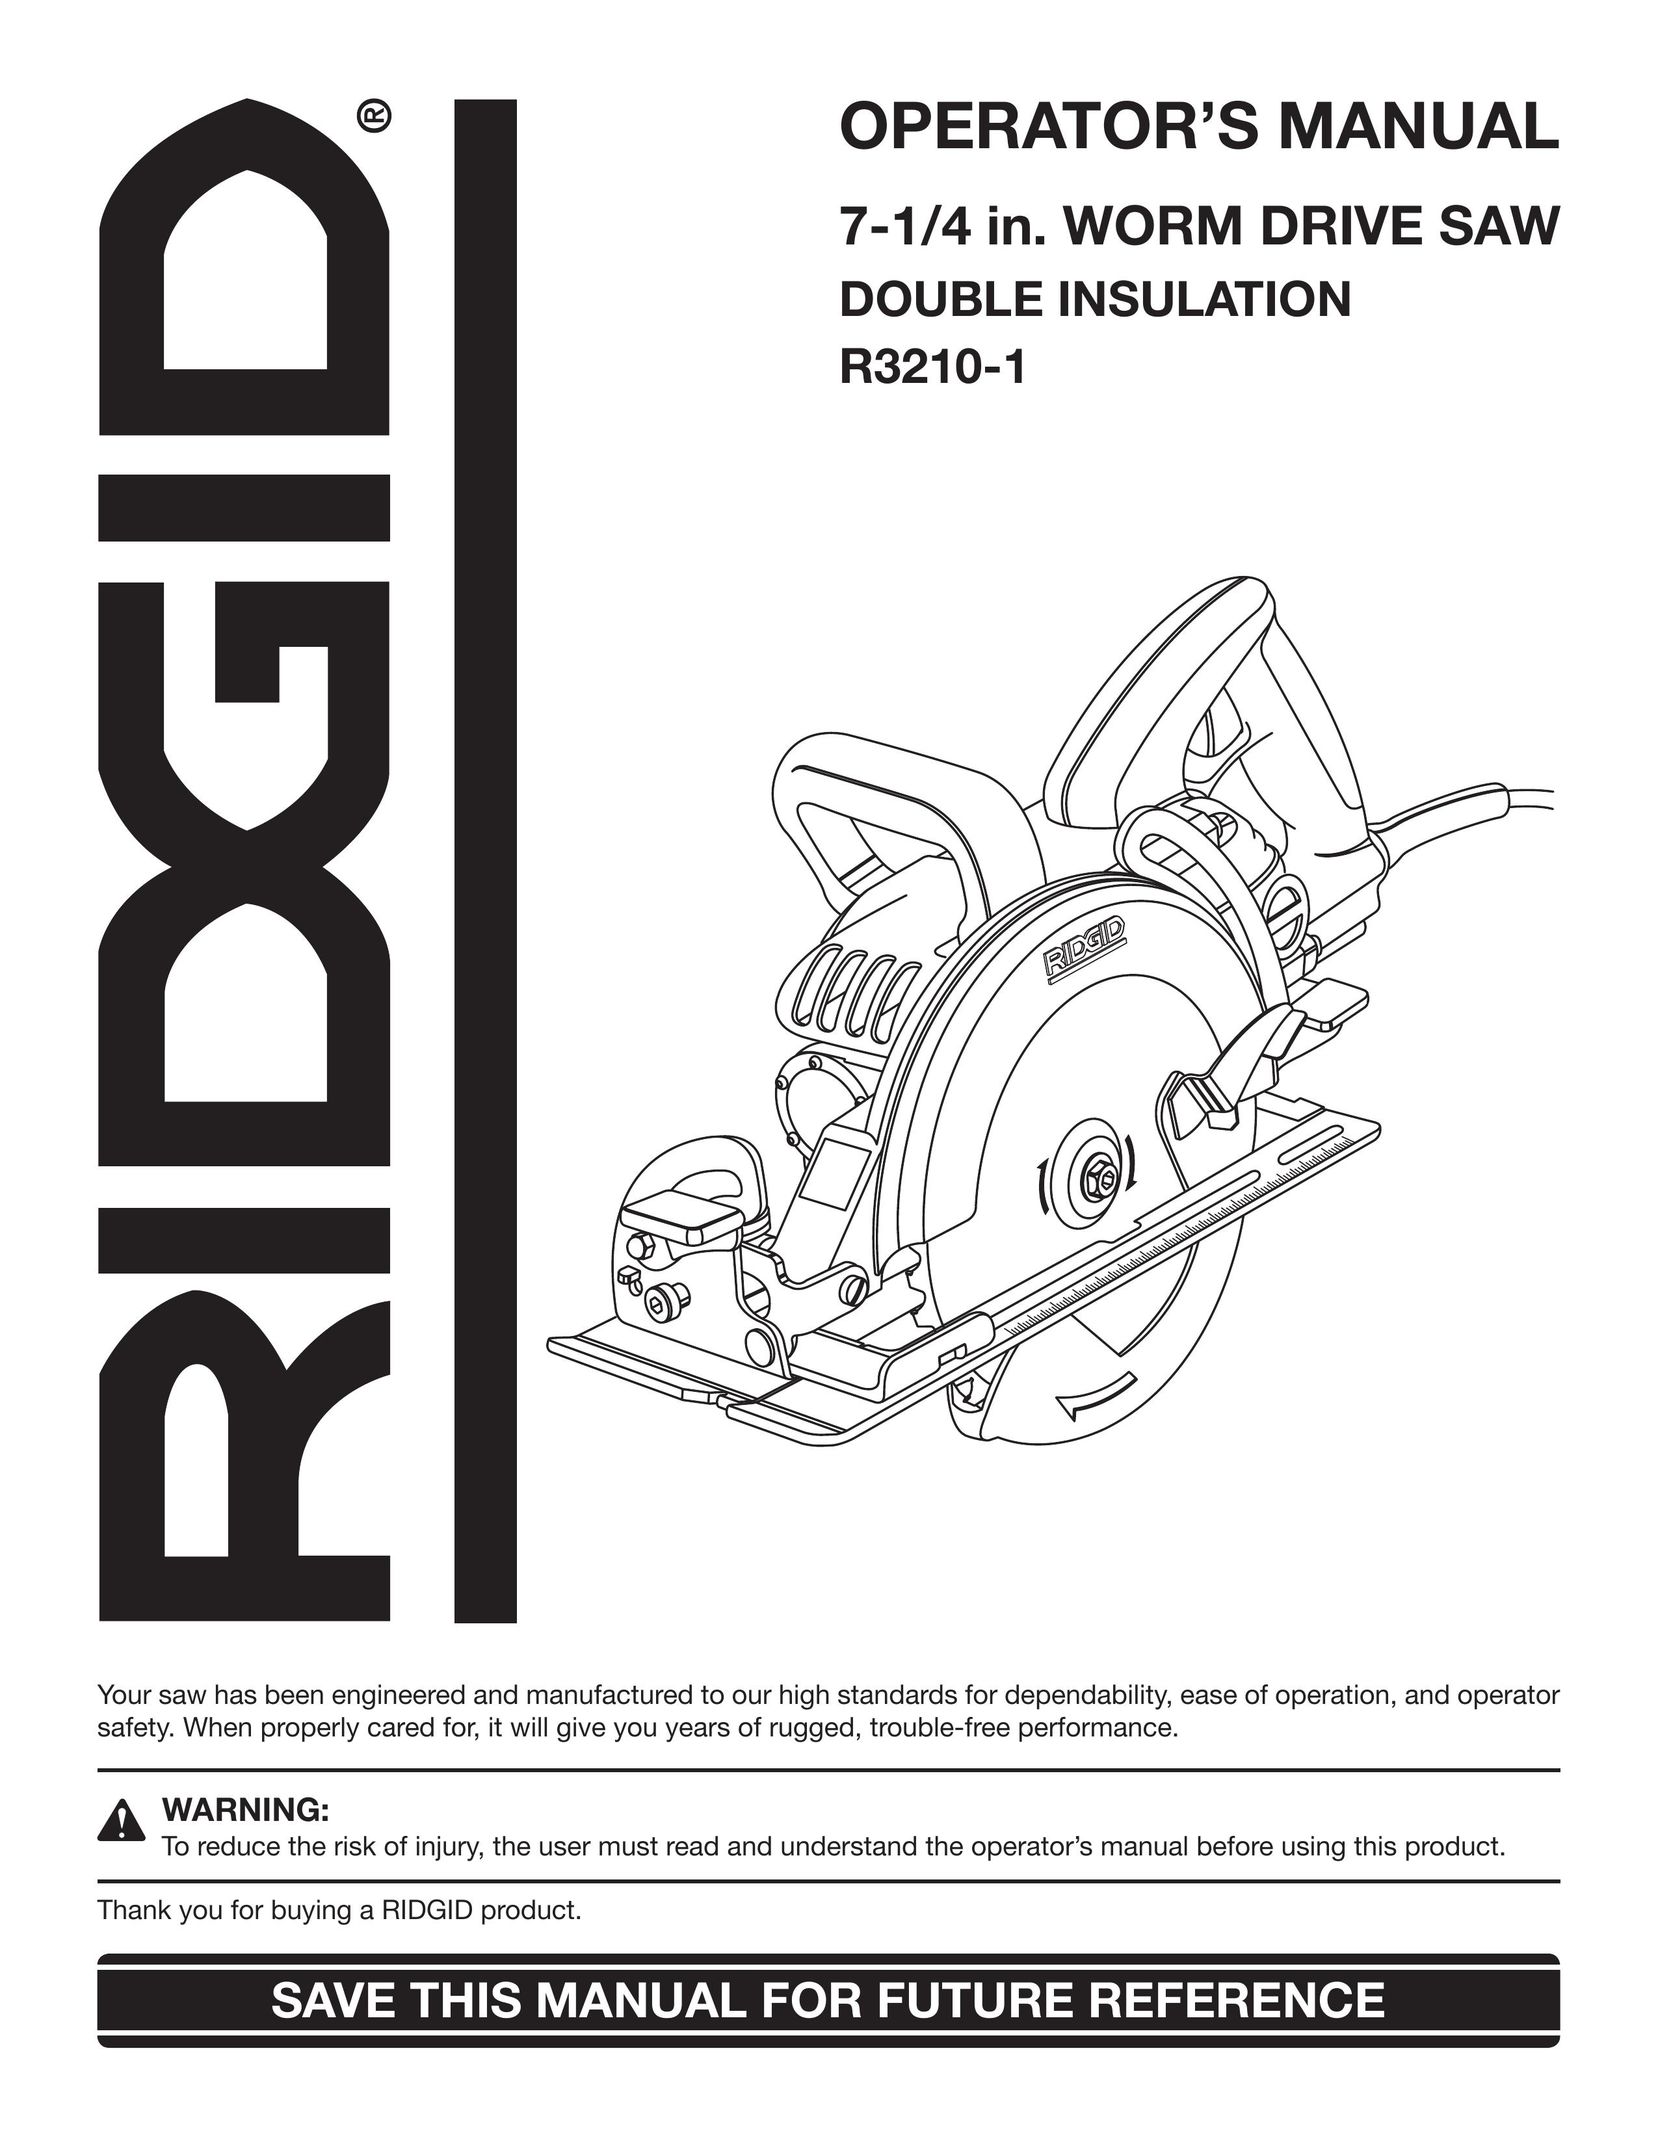 RIDGID R3210-1 Saw User Manual